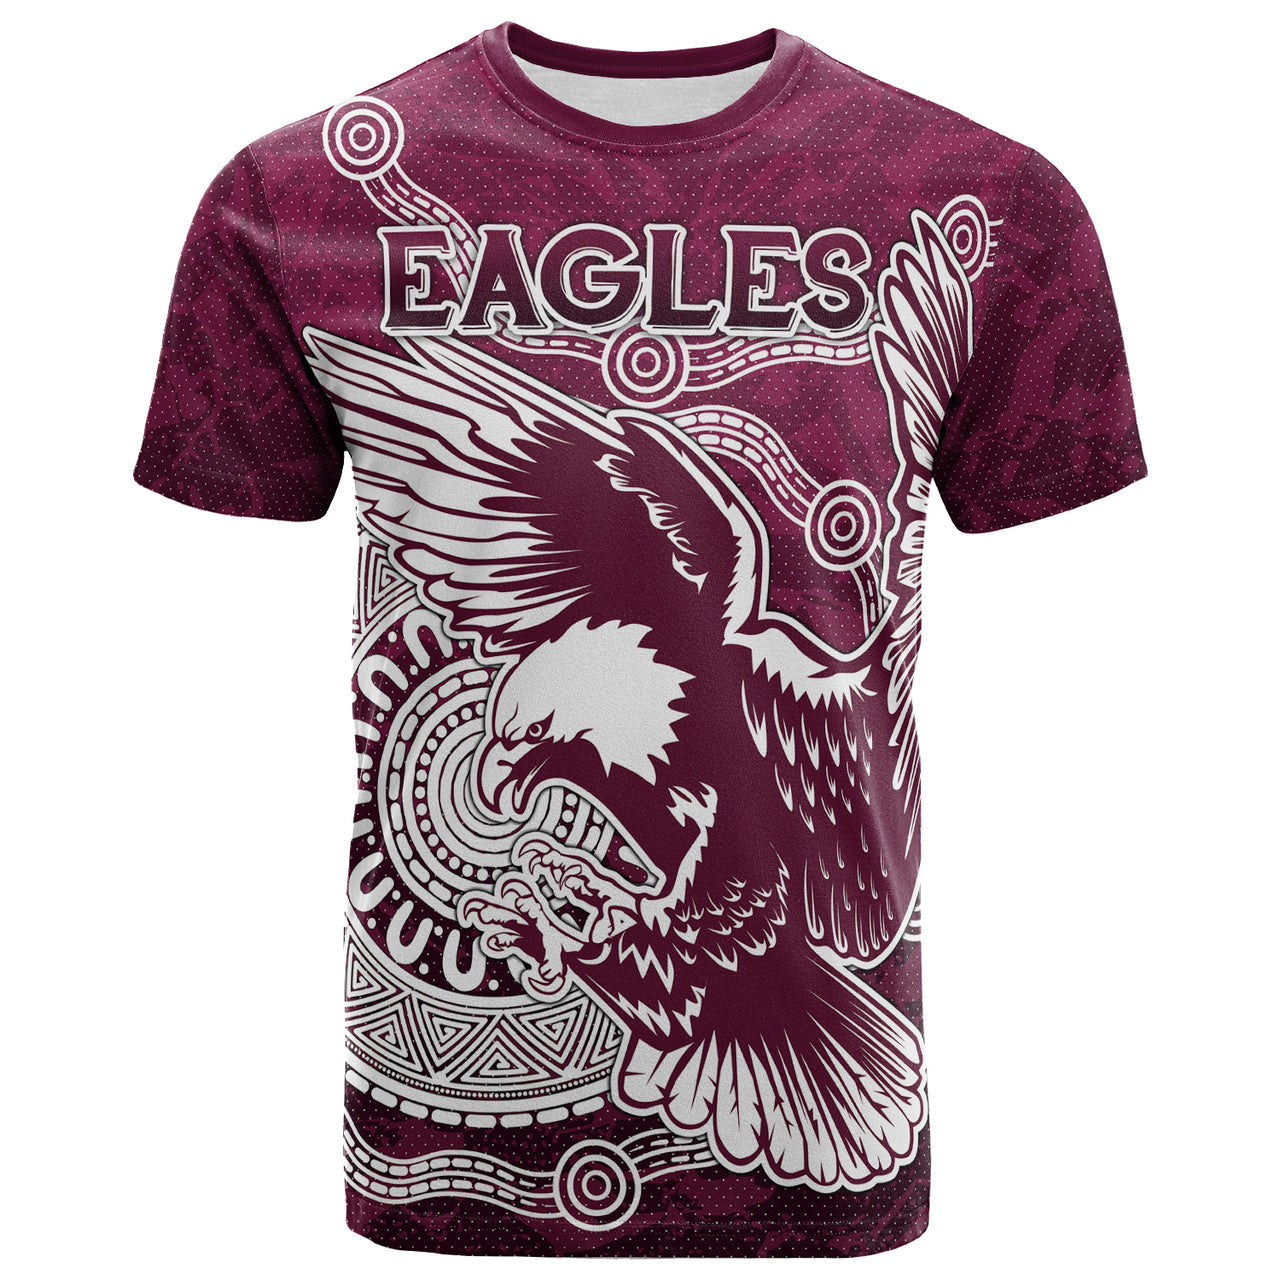 sea-eagles-rugby-t-shirt-custom-super-eagles-t-shirt-rlt13